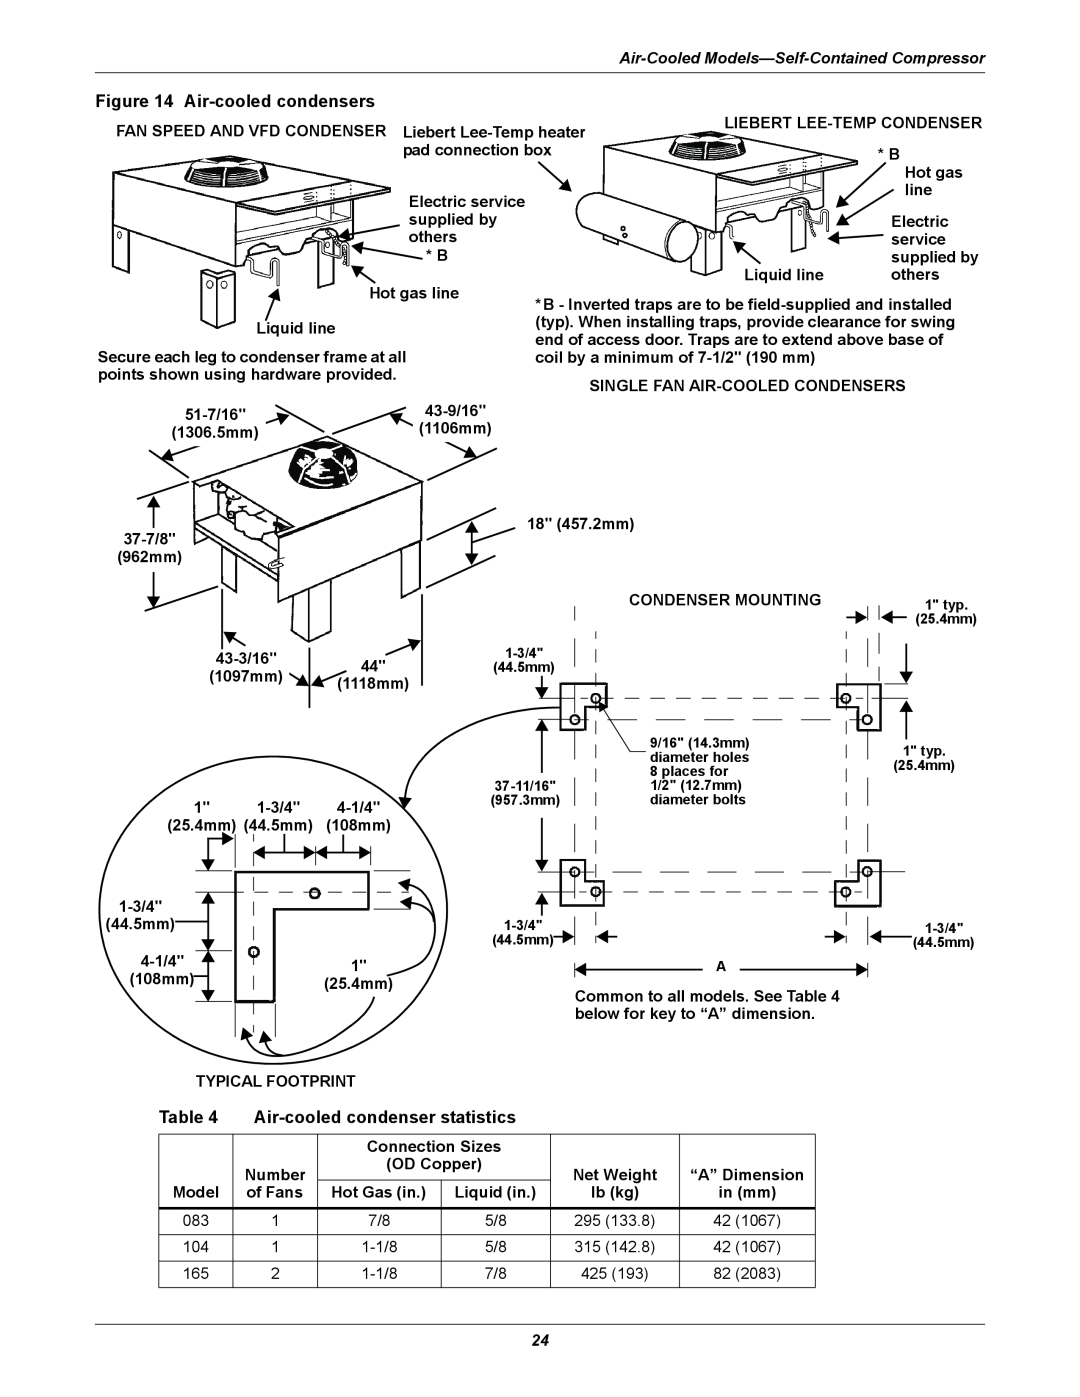 Emerson 3000 installation manual Air-cooledcondensers, Air-cooledcondenser statistics 